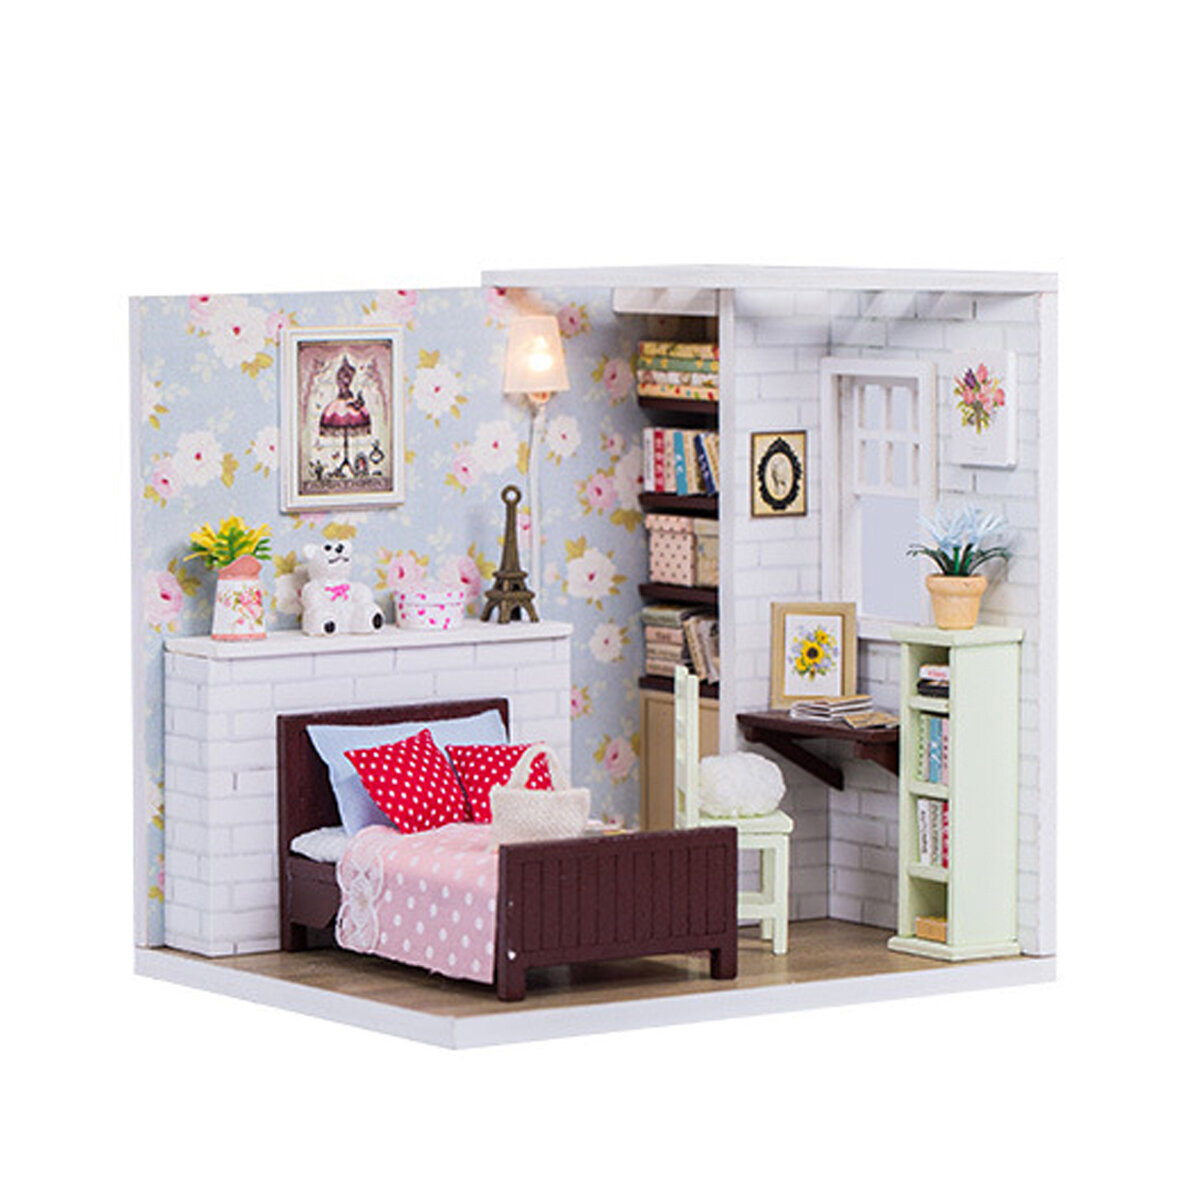 DIY Mini Dollhouse Princess Girls House Wooden Furniture Kit Handmade Miniature House Creative Assembling Doll House Toy